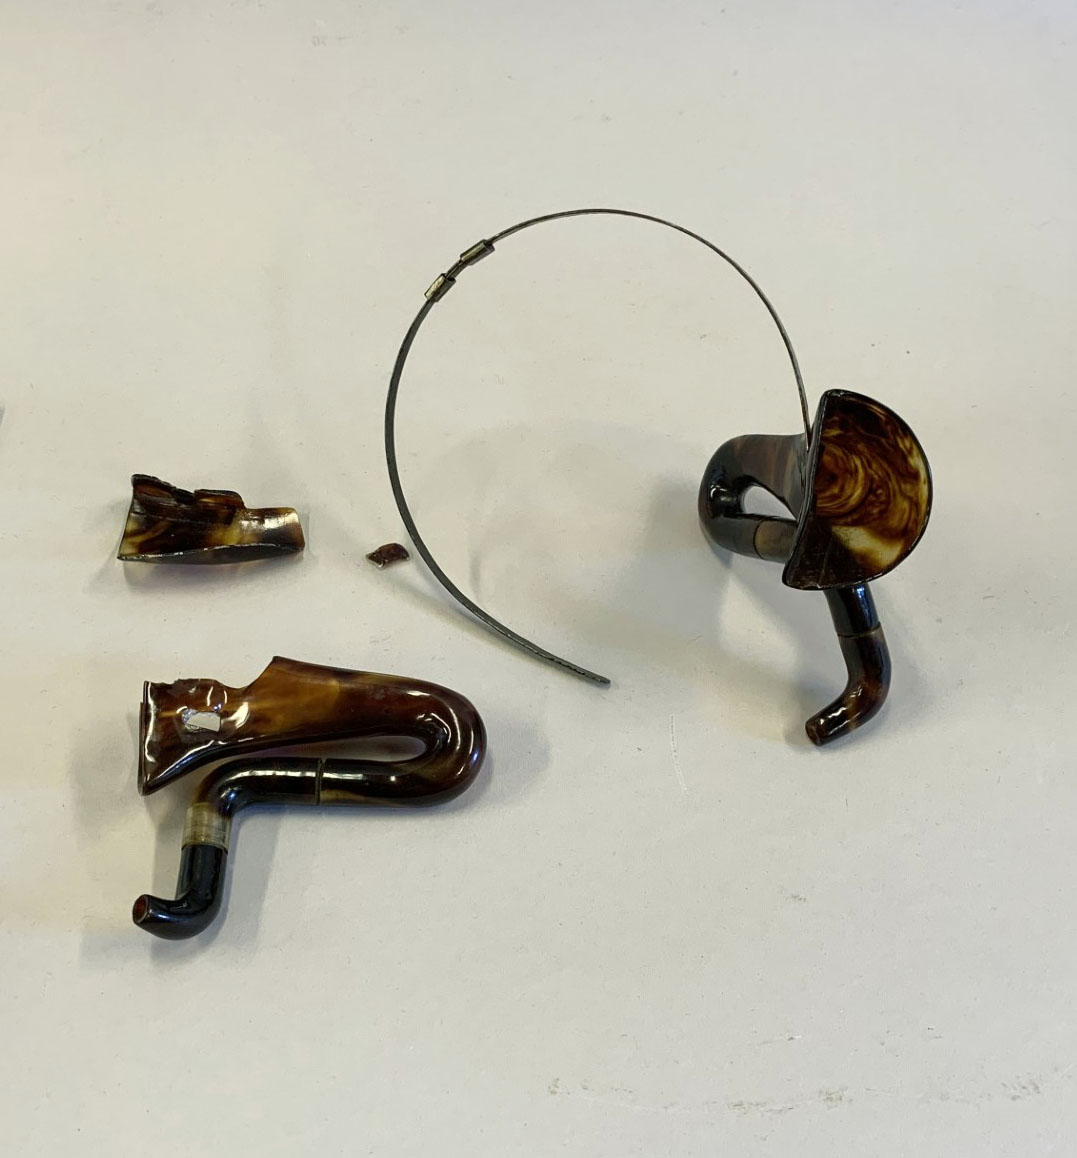 Image shoes a hearing cornet broken into four pieces.